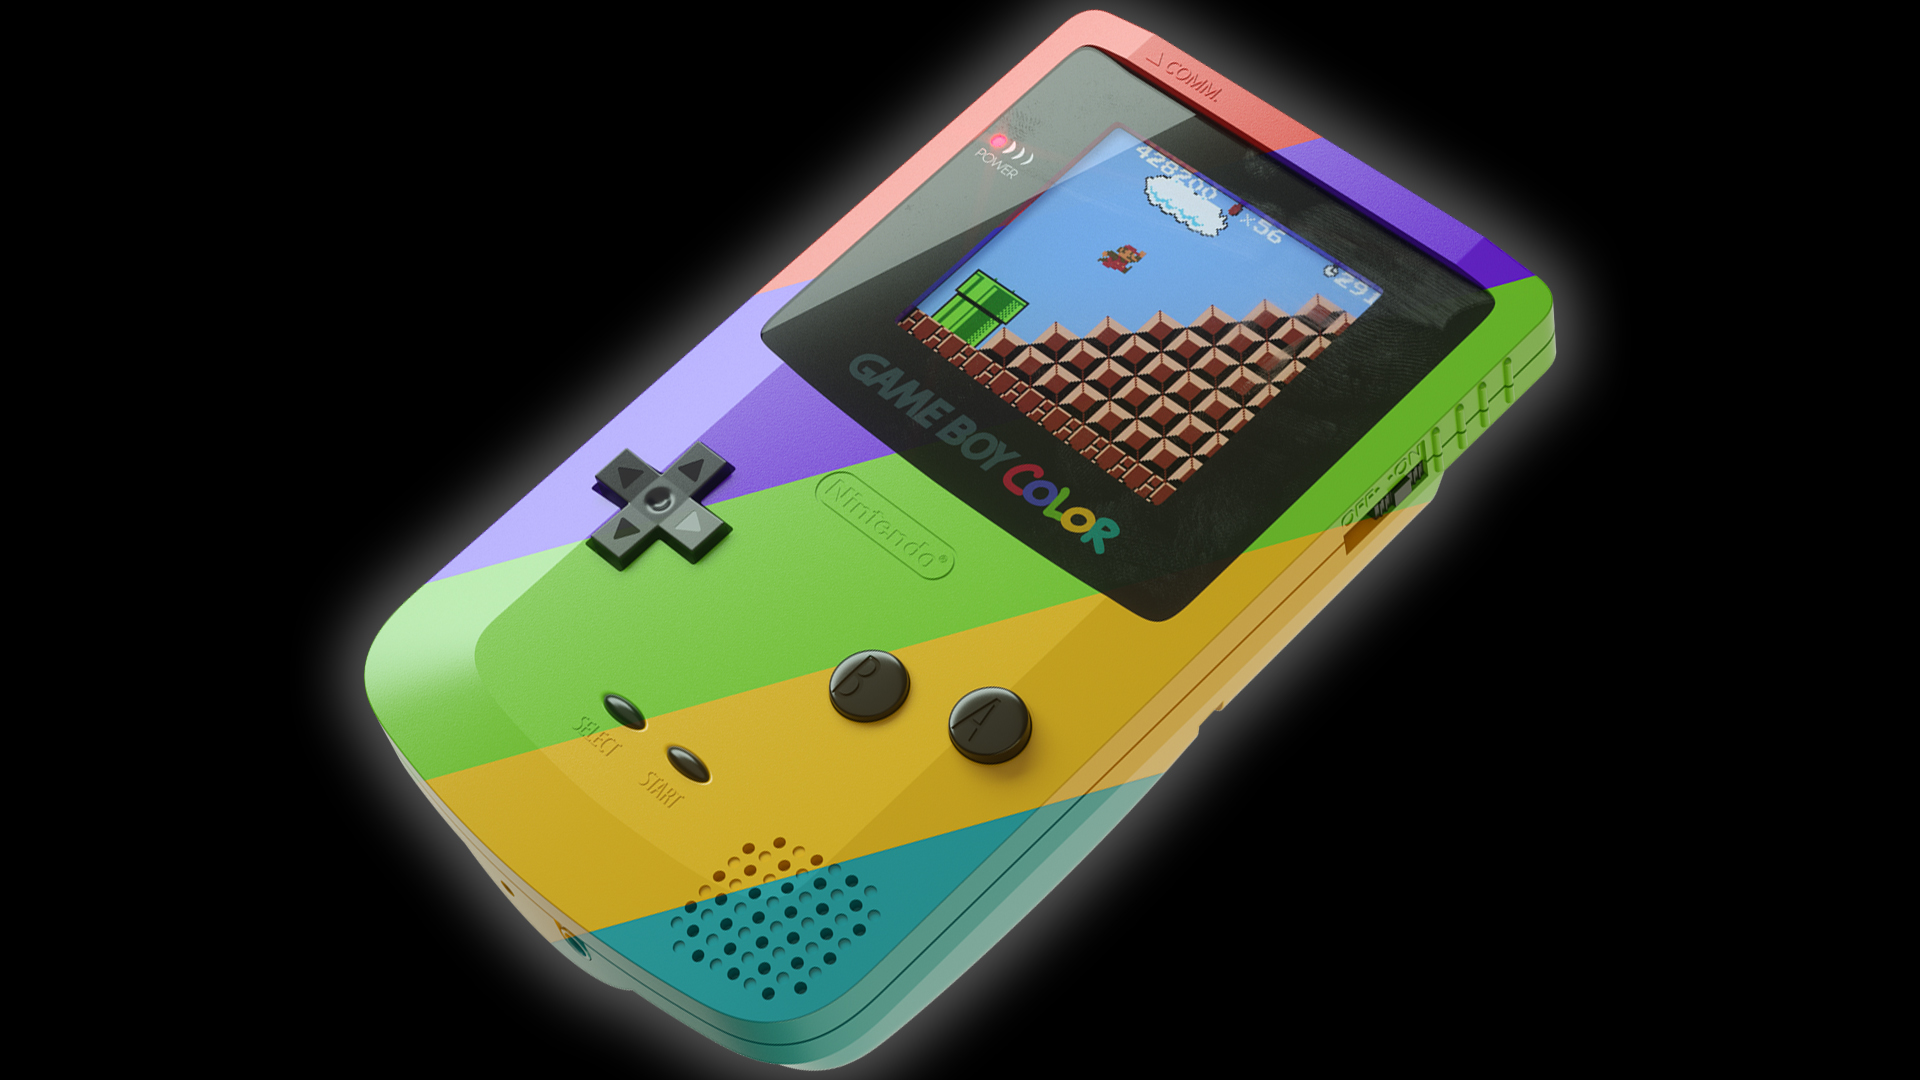 Game Boy Color گیم بوی کالر رنگی دانلود بازی رام شبیه ساز موبایل کامپیوتر قدیمی رترو